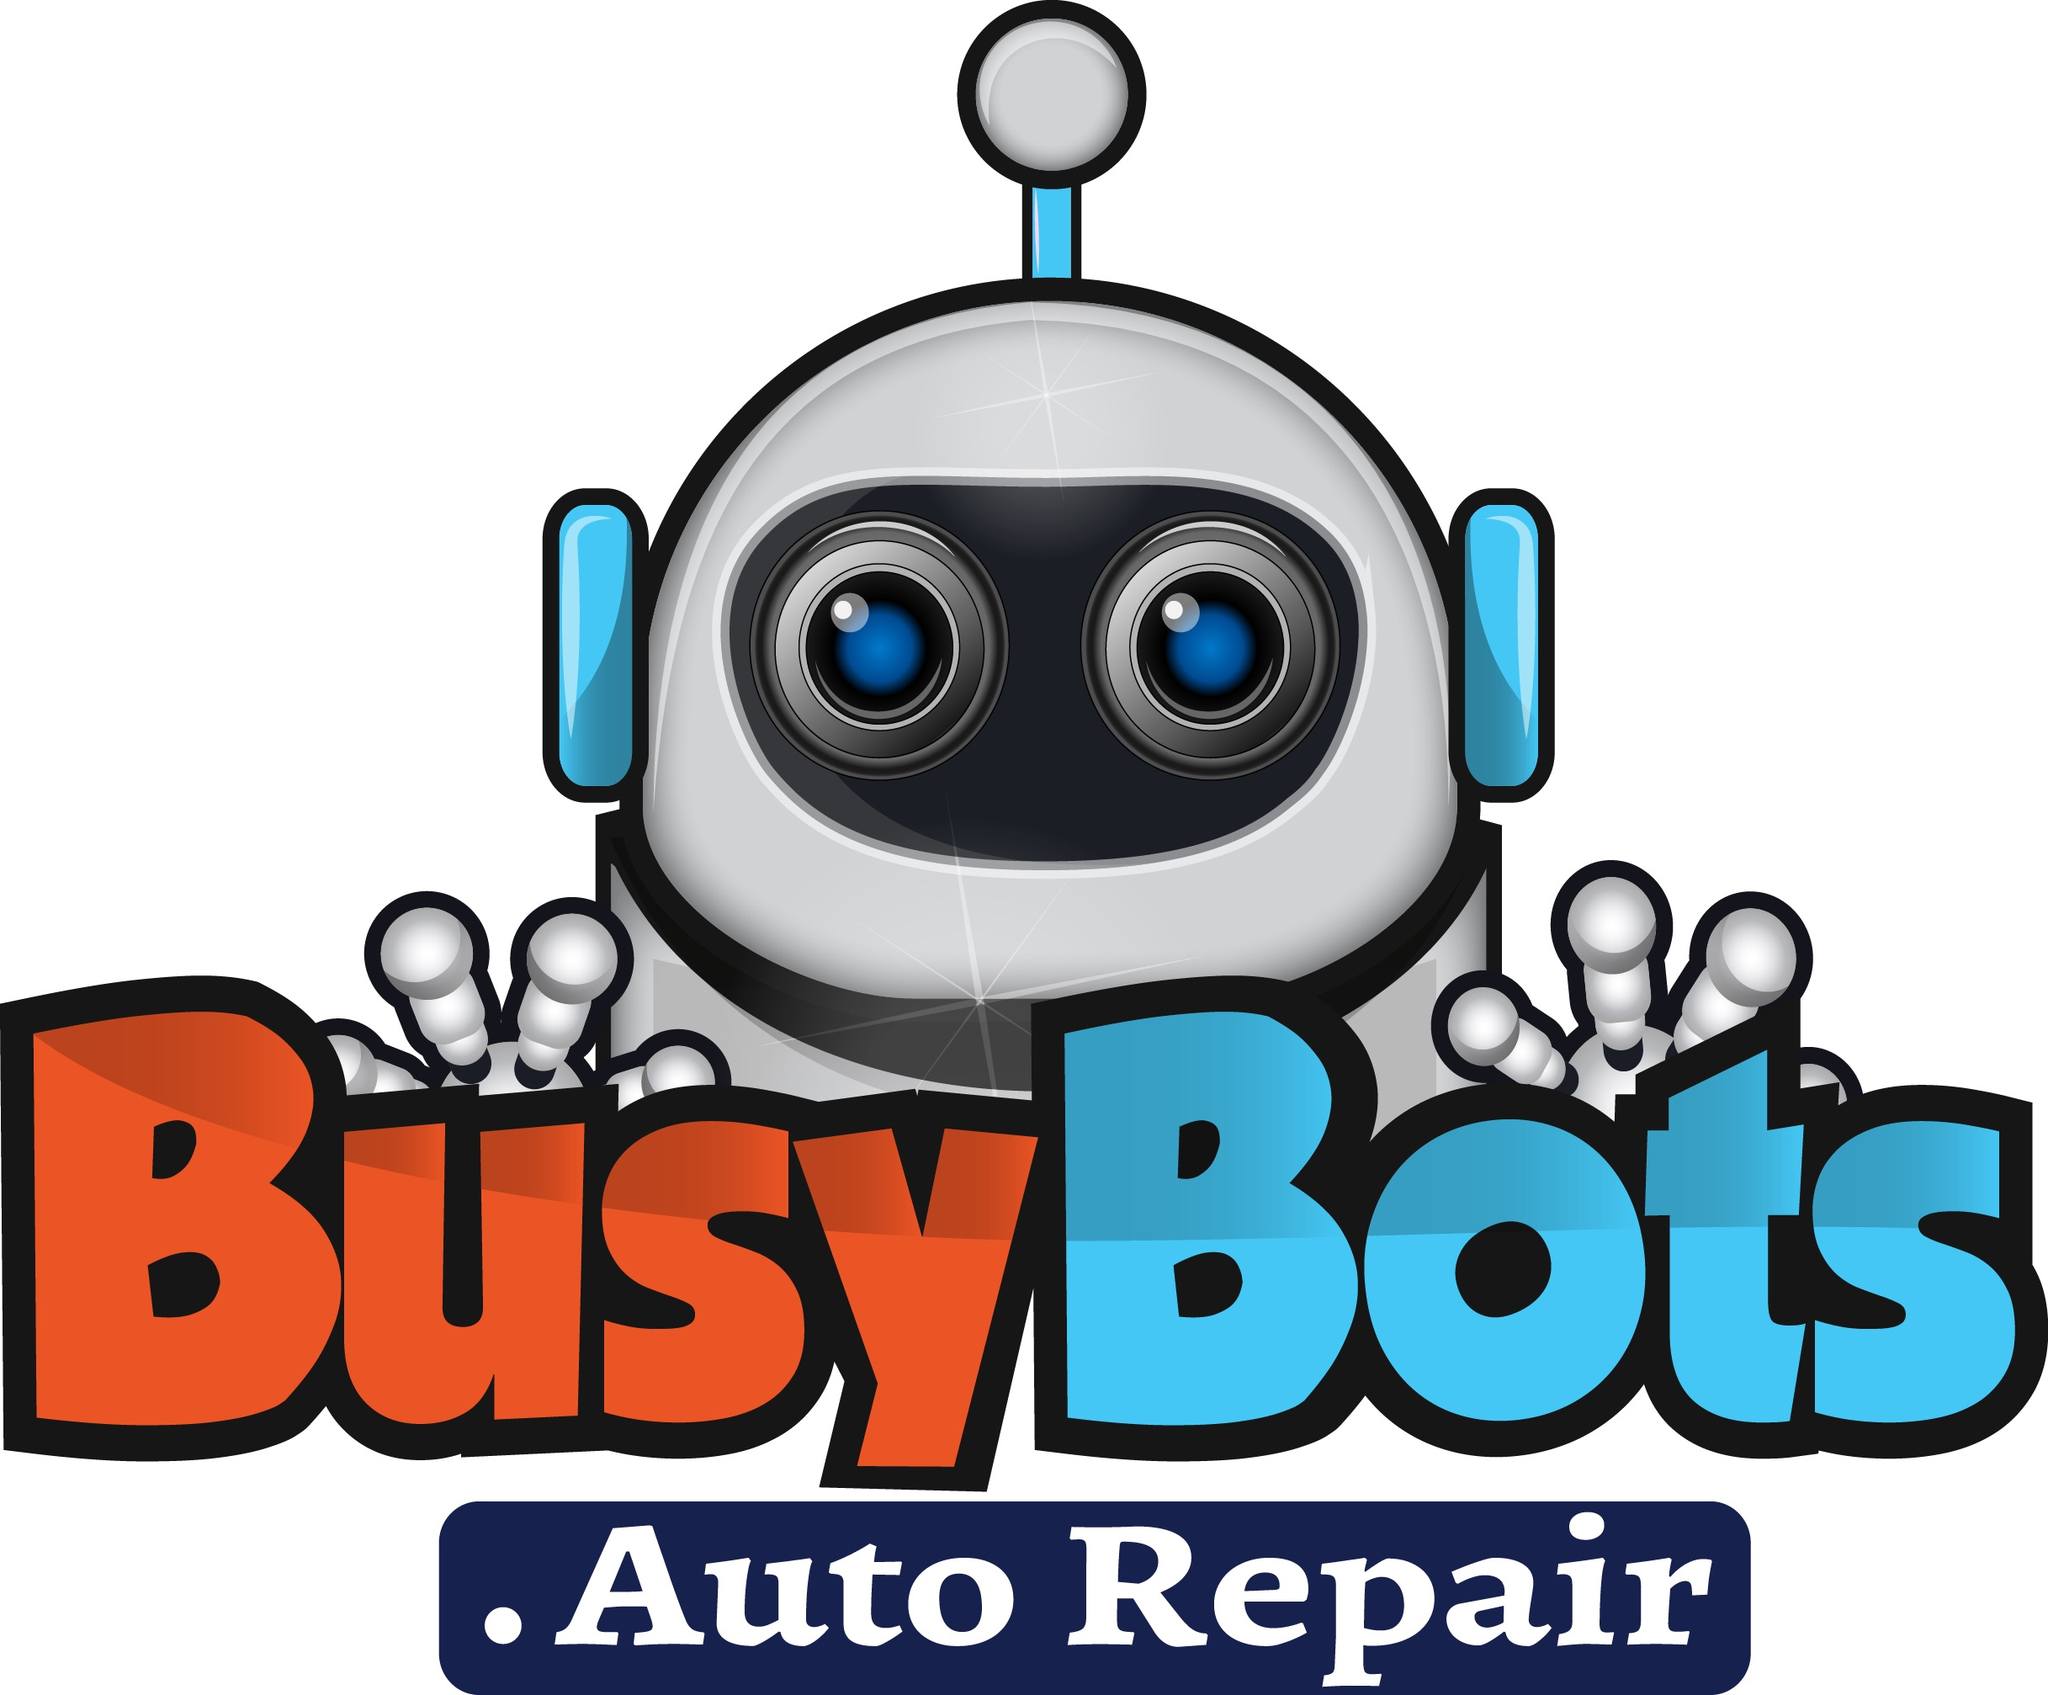 Busy Bots Auto